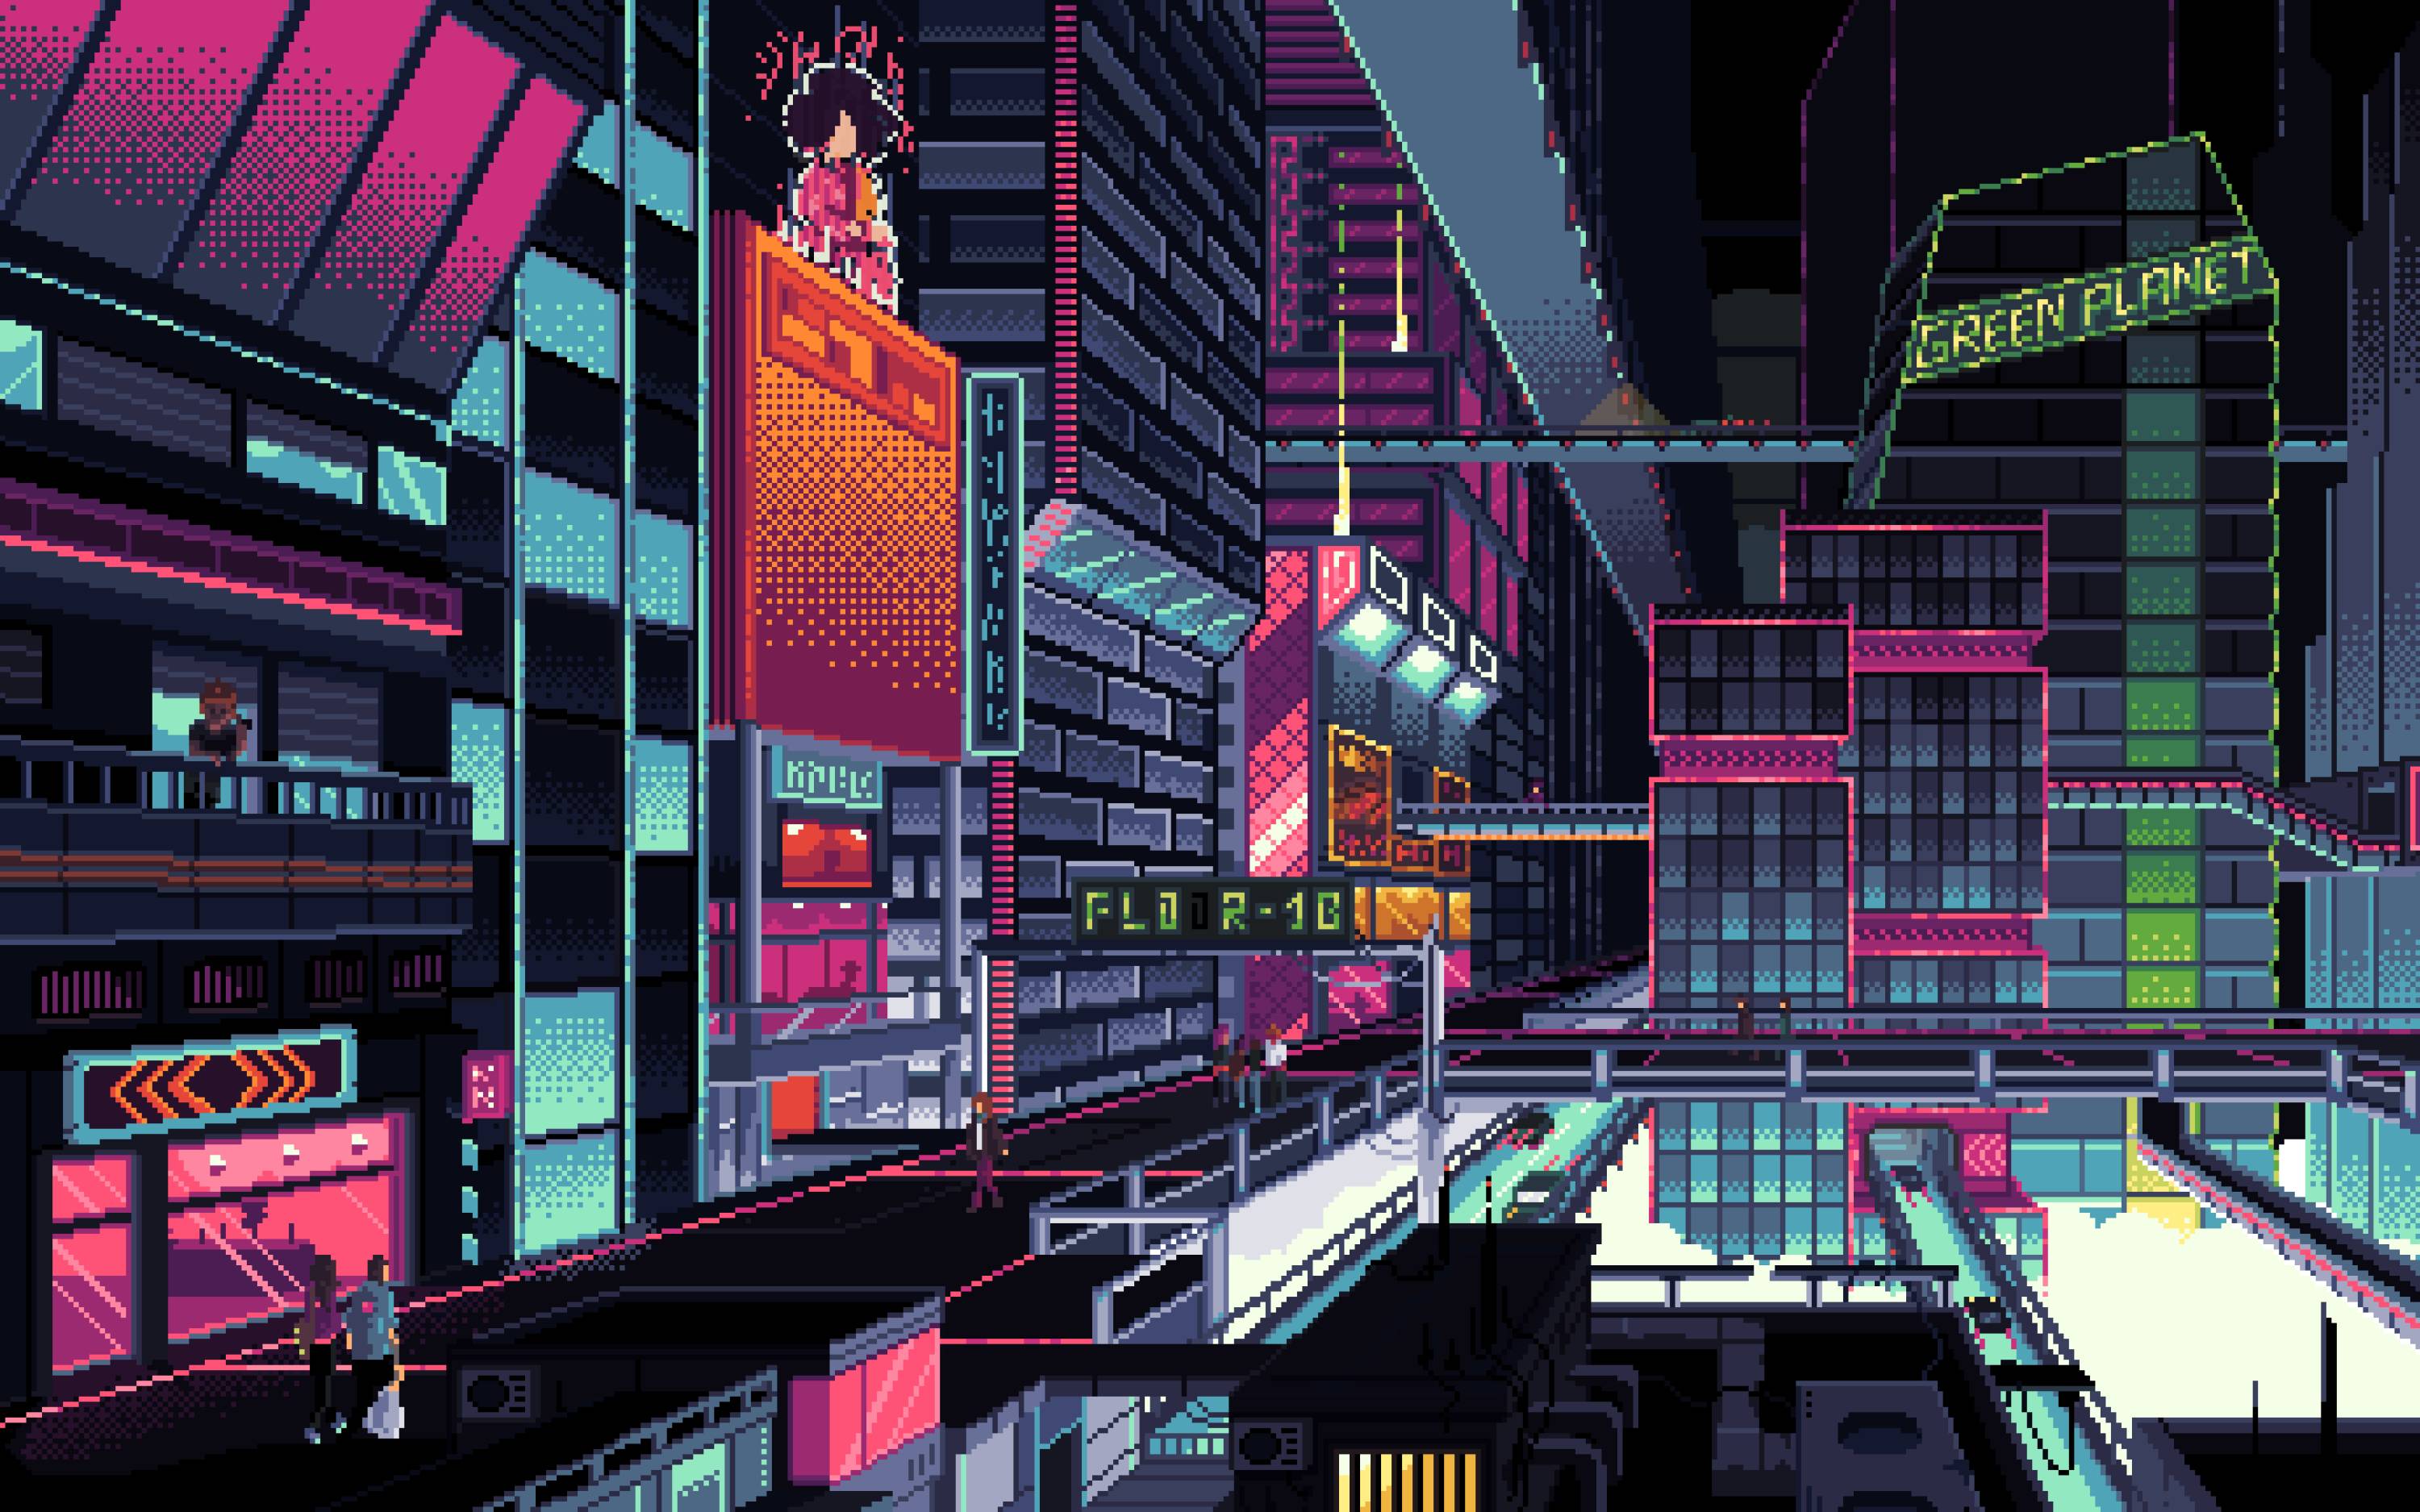 A futuristic city scene with neon lights - Cyberpunk, pixel art